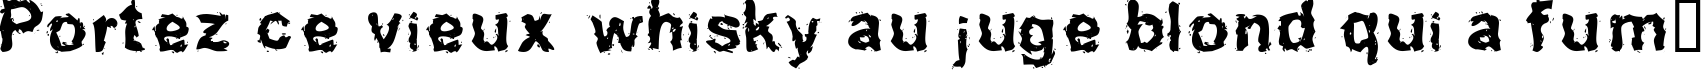 Пример написания шрифтом Inked weird текста на французском